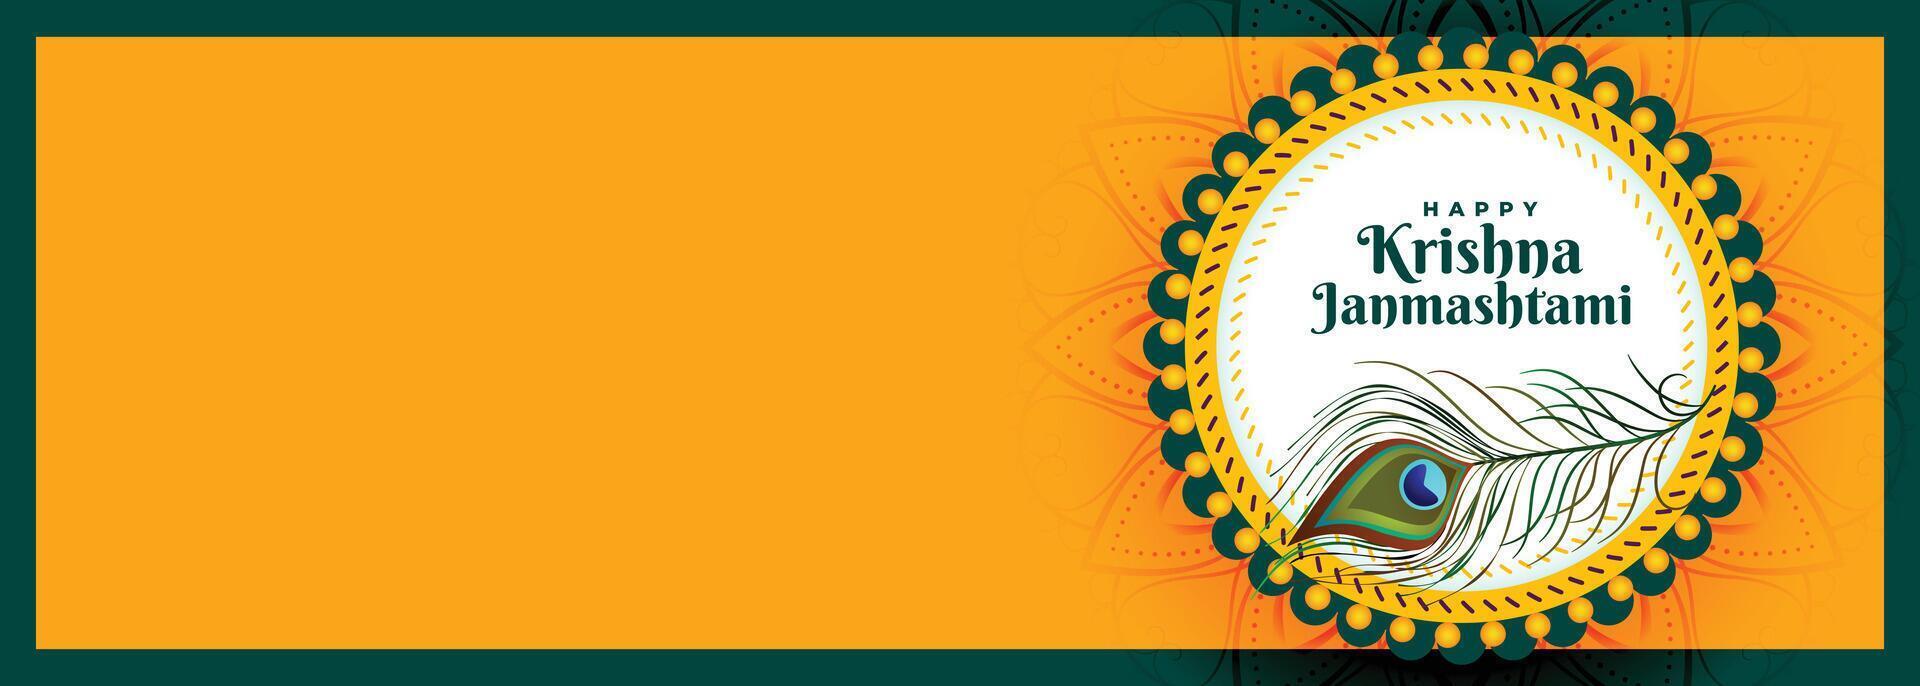 dekorativ Lycklig krishna Janmashtami festival baner design vektor